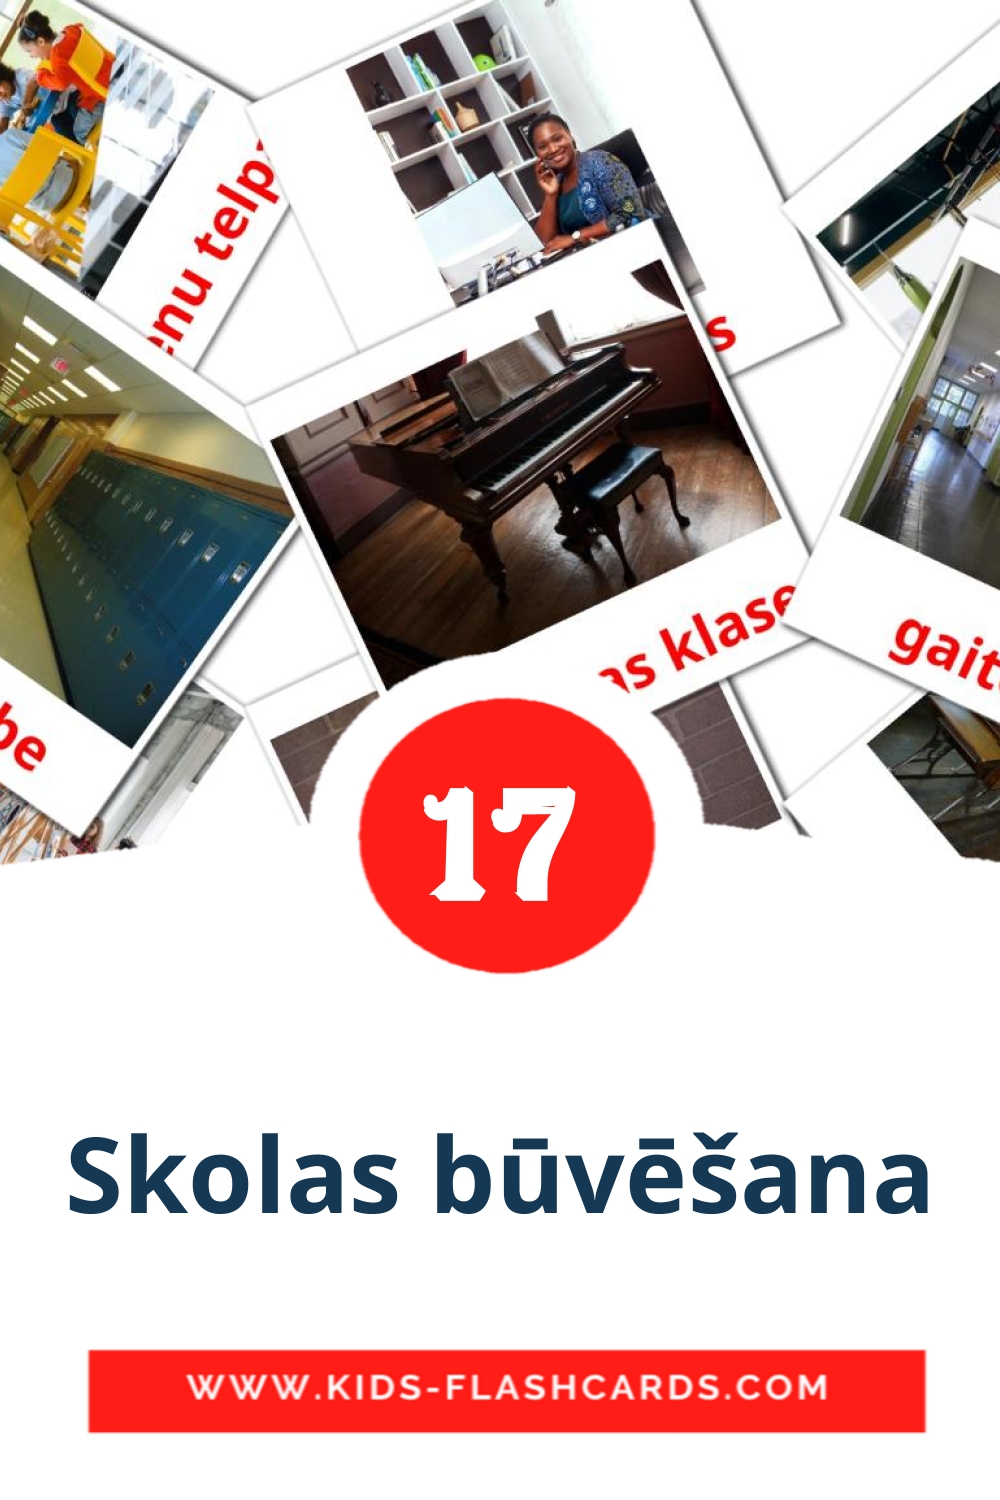 17 carte illustrate di Skolas būvēšana per la scuola materna in lettone